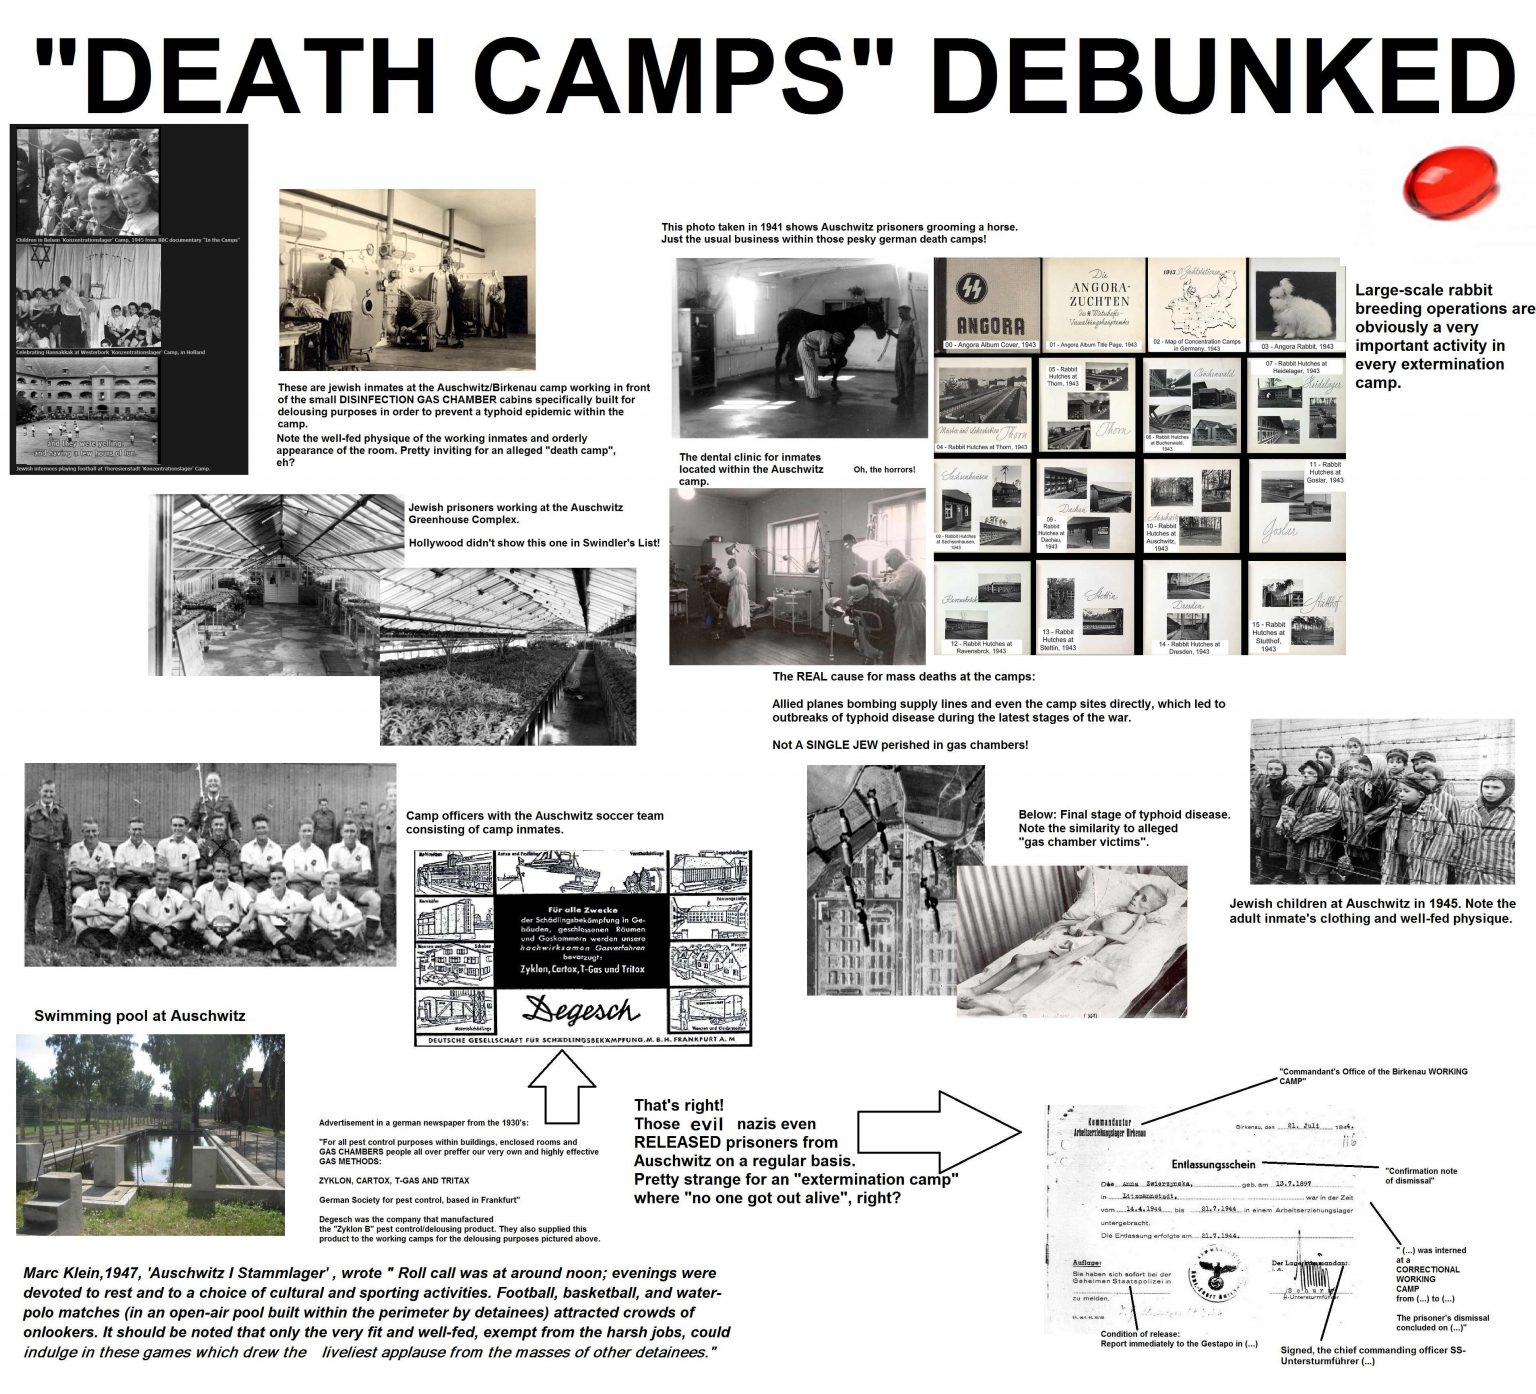 Death_Camps_Debunked-1-1536x1394.jpg